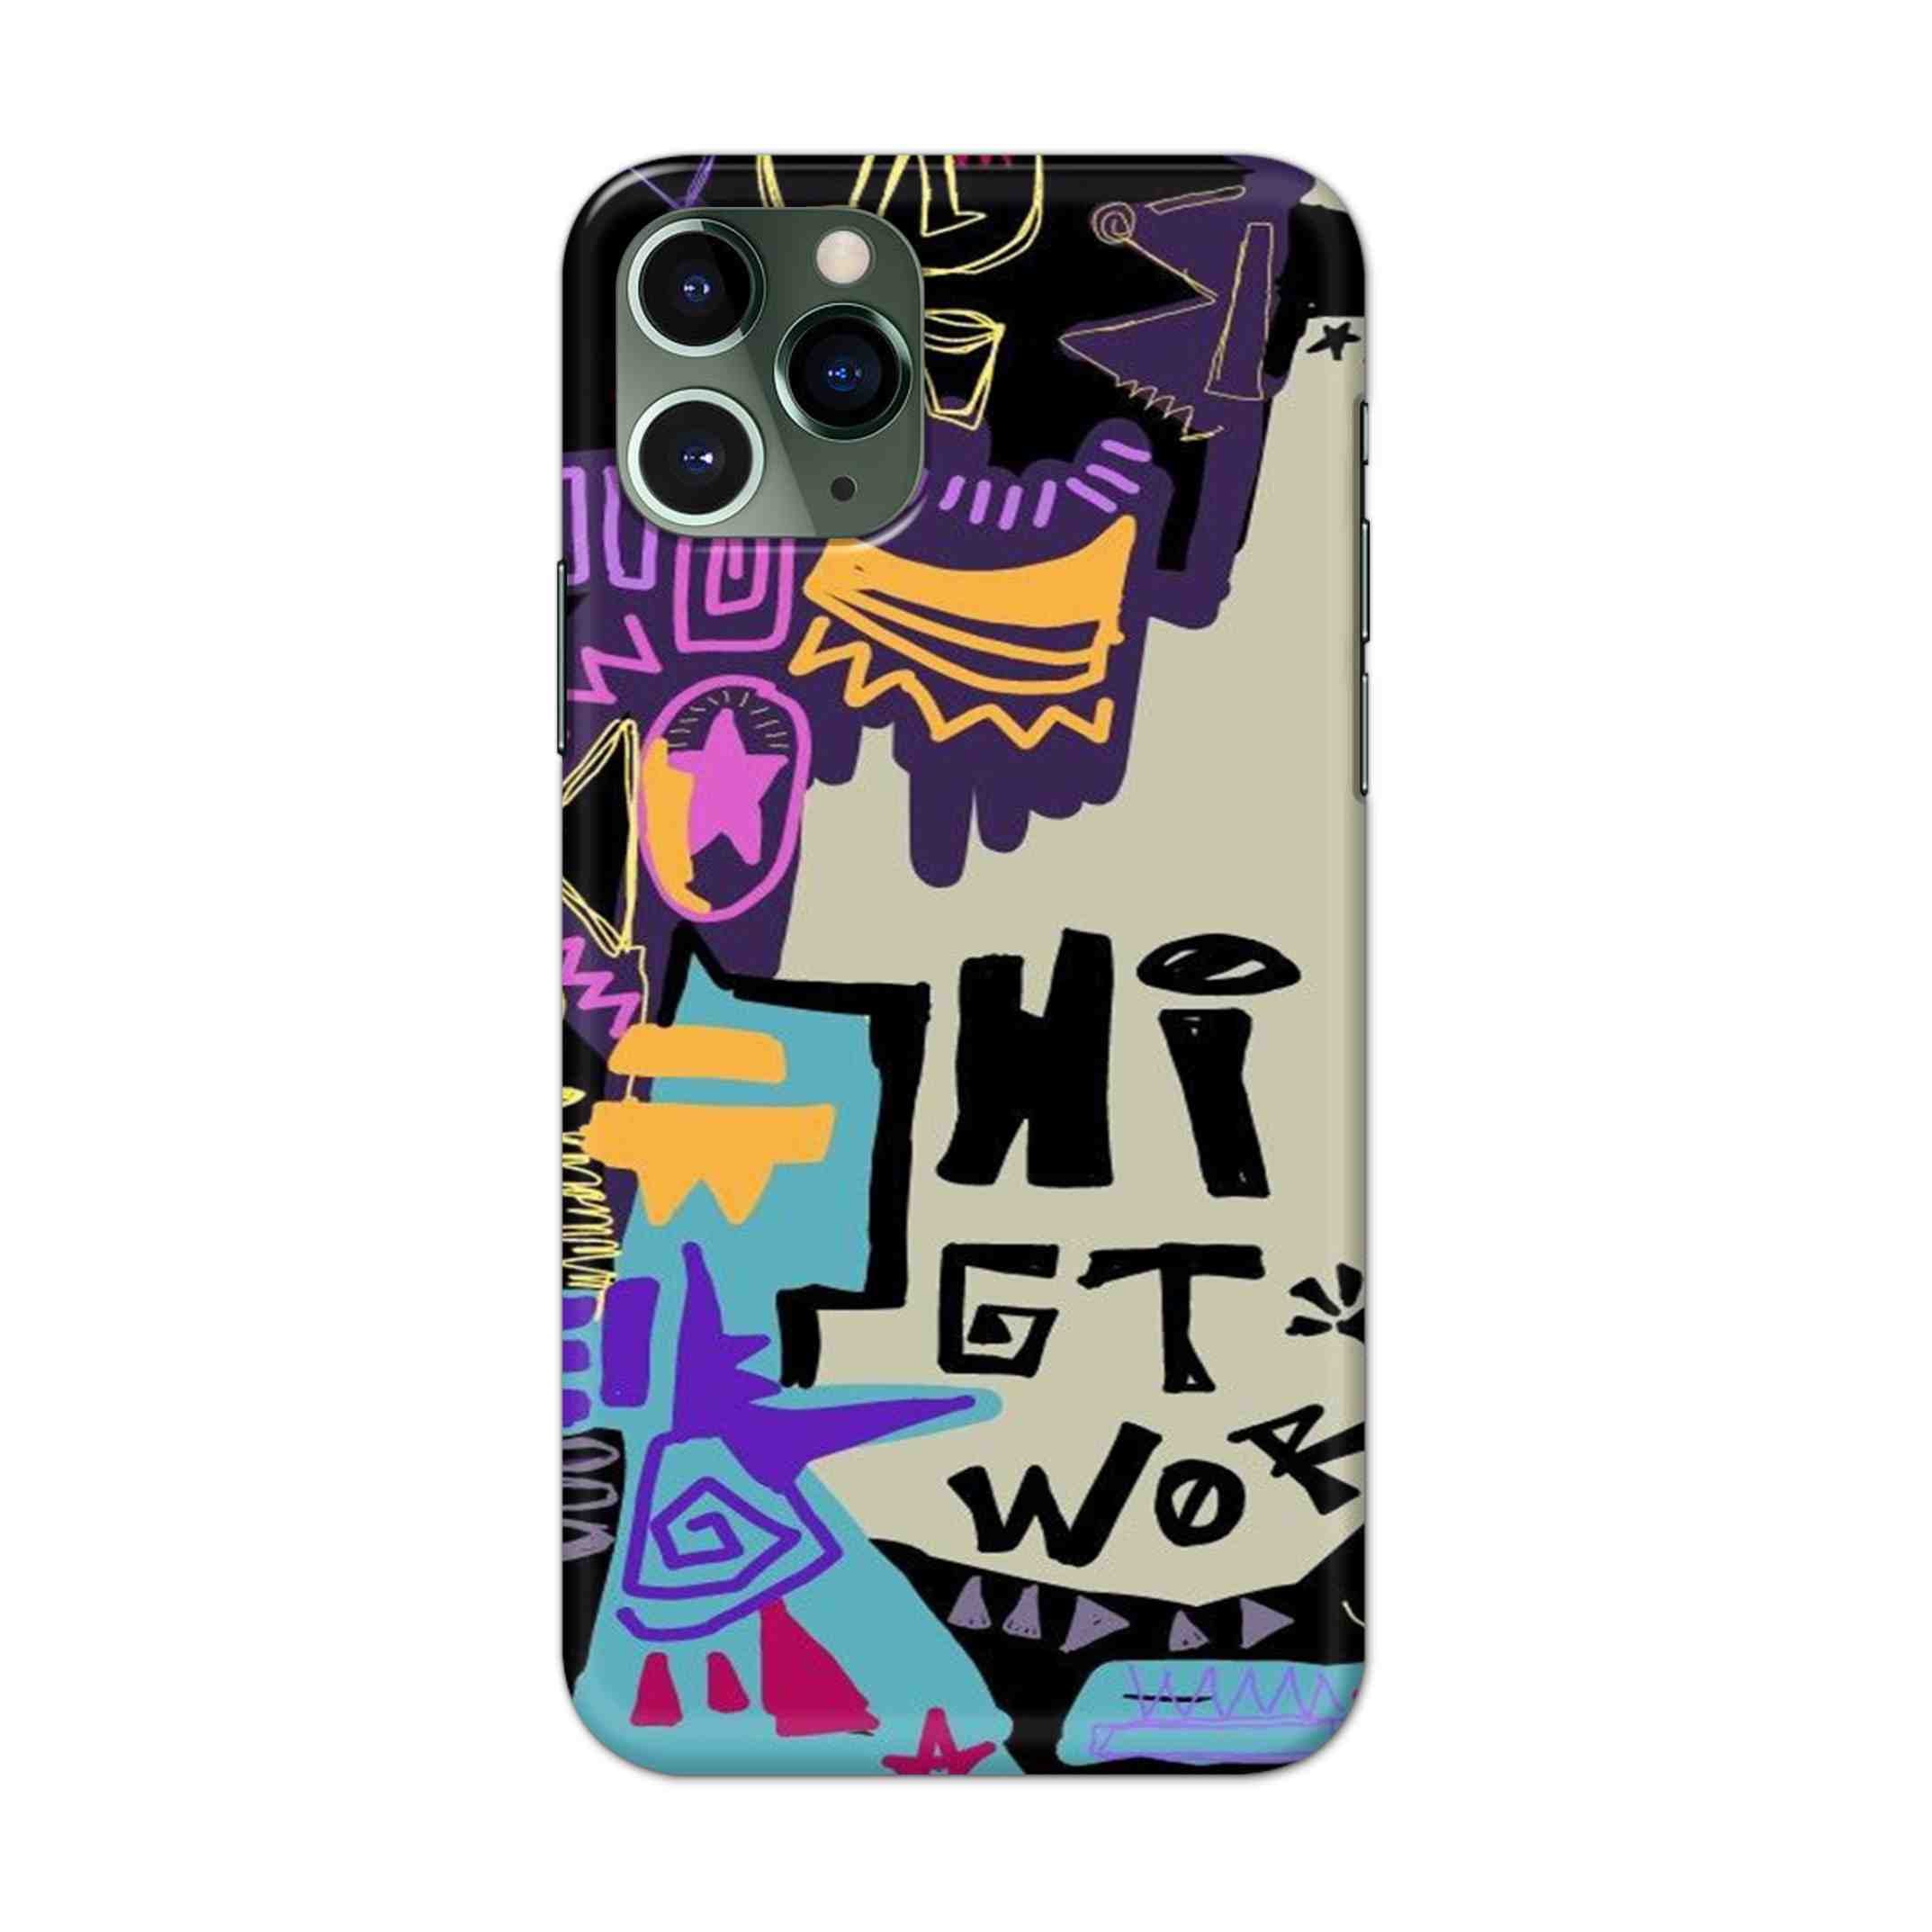 Buy Hi Gt World Hard Back Mobile Phone Case/Cover For iPhone 11 Pro Online